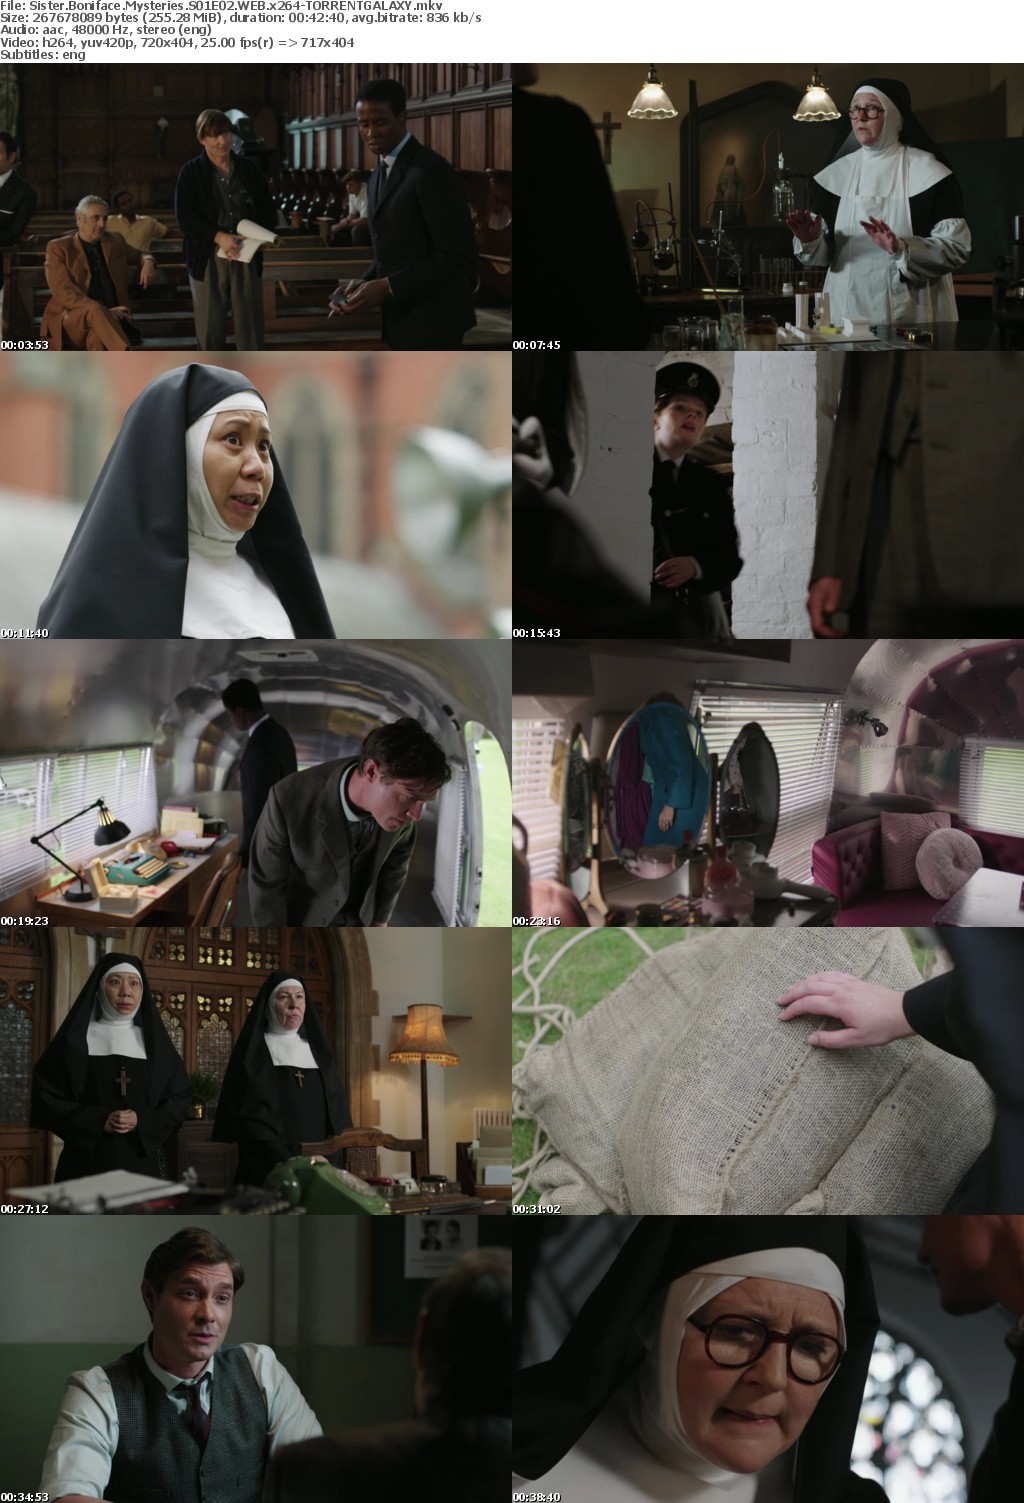 Sister Boniface Mysteries S01E02 WEB x264-GALAXY